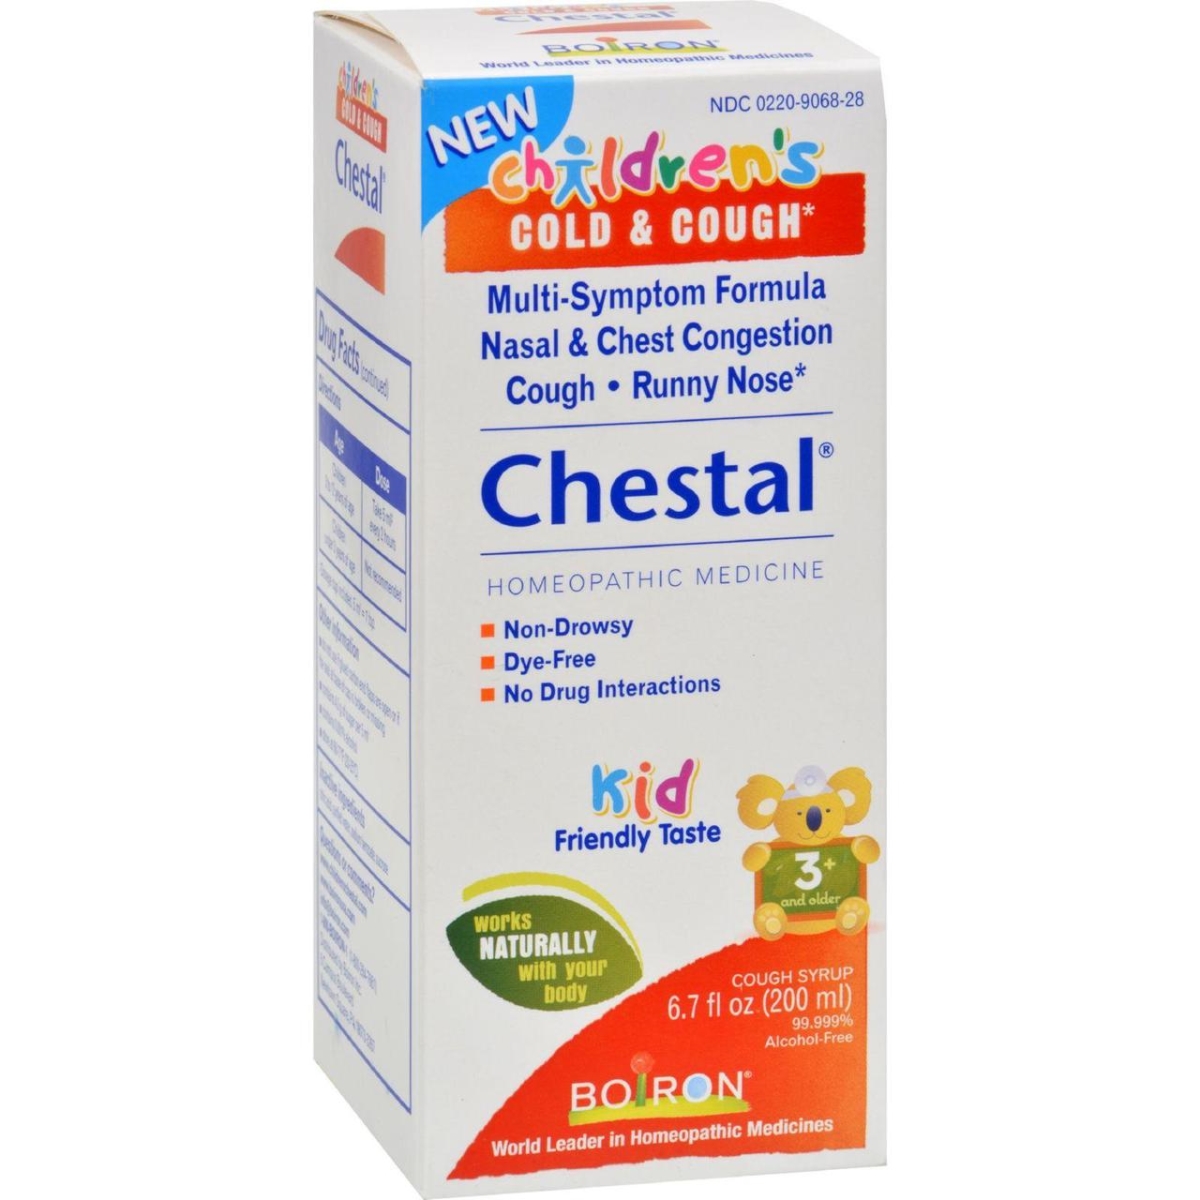 Hg1275437 6.7 Oz Childrens Chestal Cough & Cold